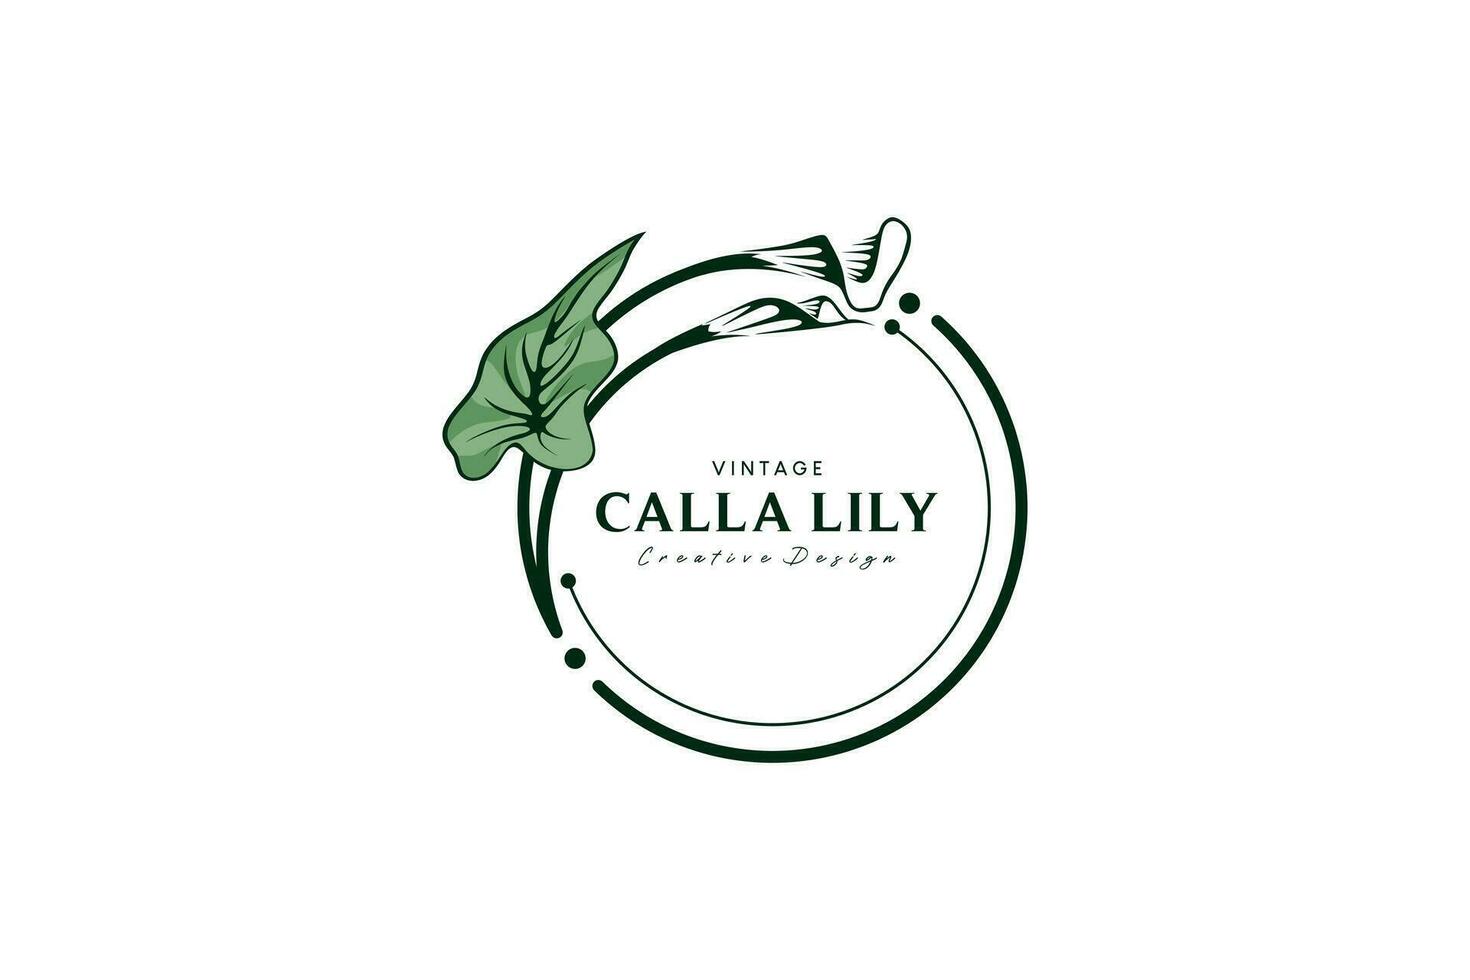 Calla lily vector floral frame logo for business design badges, labels, logos and branding